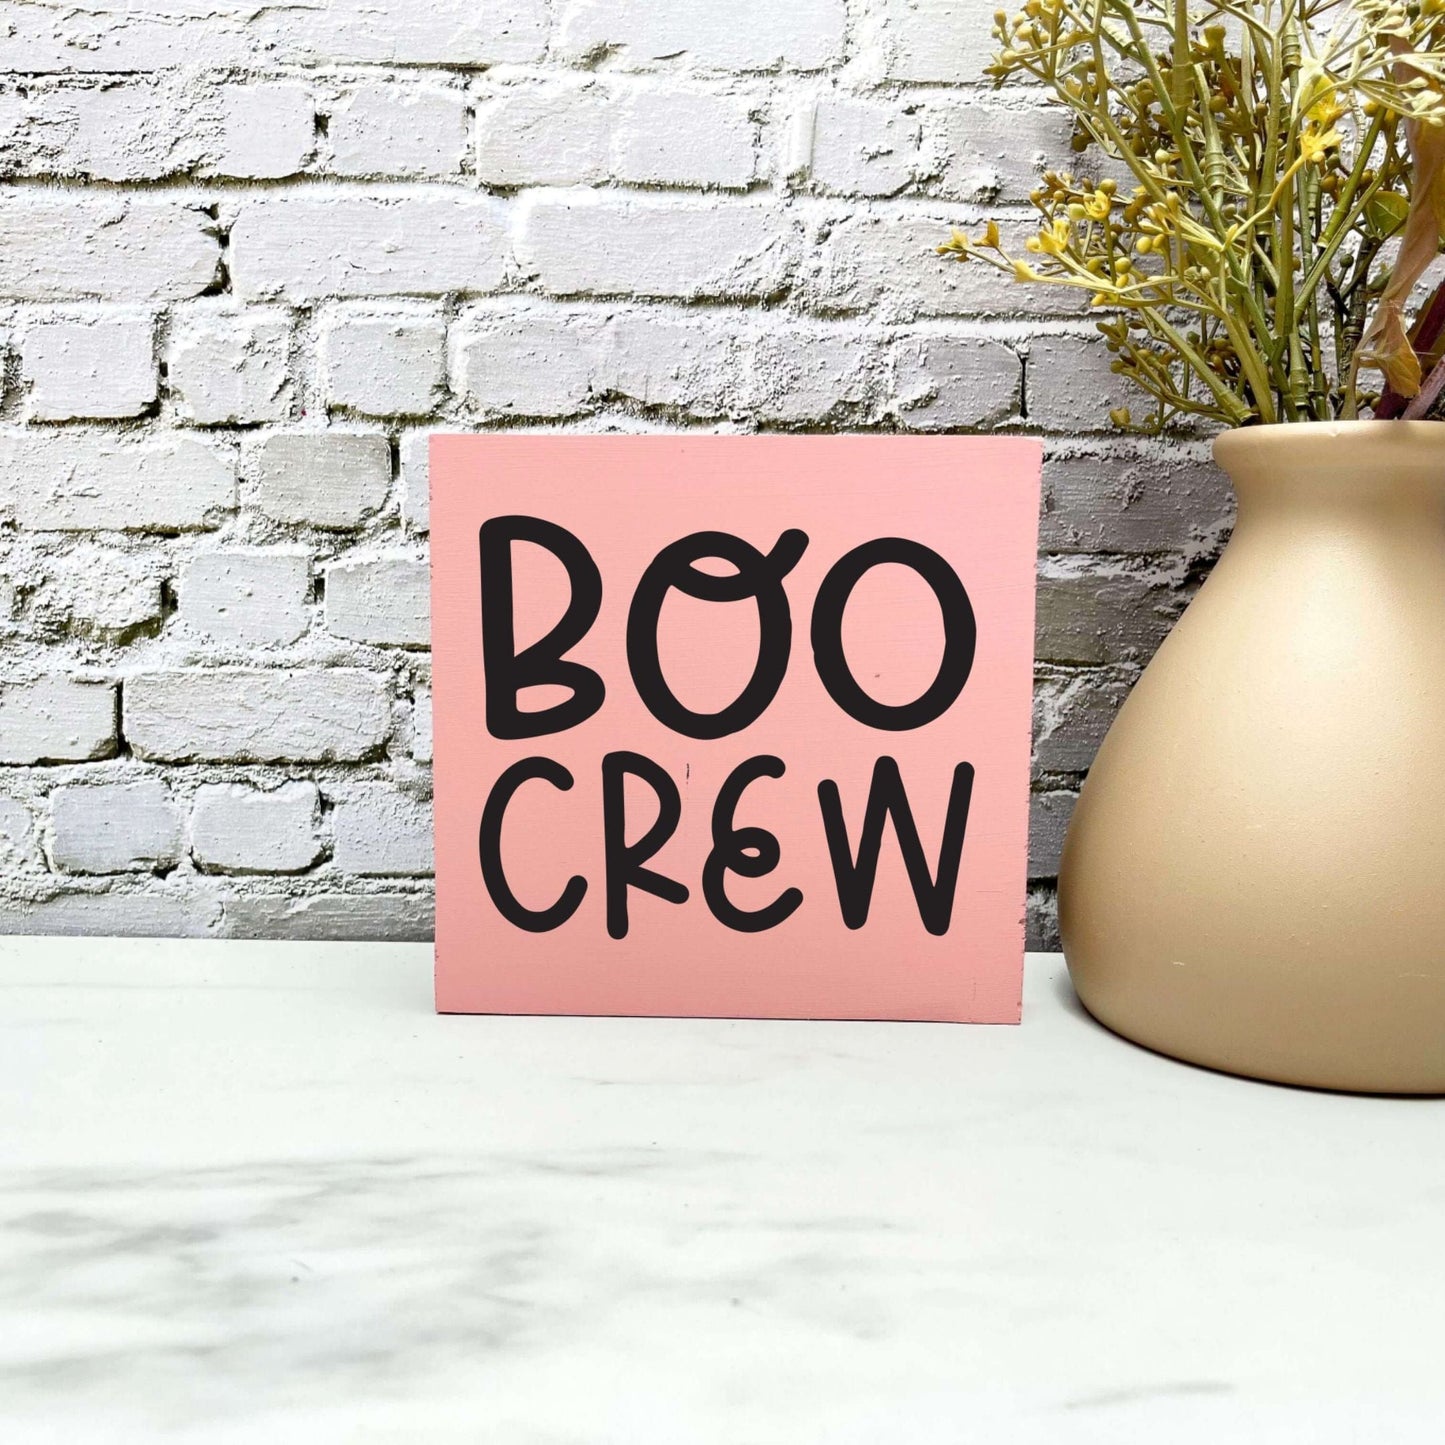 Boo crew Wood Sign, Halloween Wood Sign, Halloween Home Decor, Spooky Decor